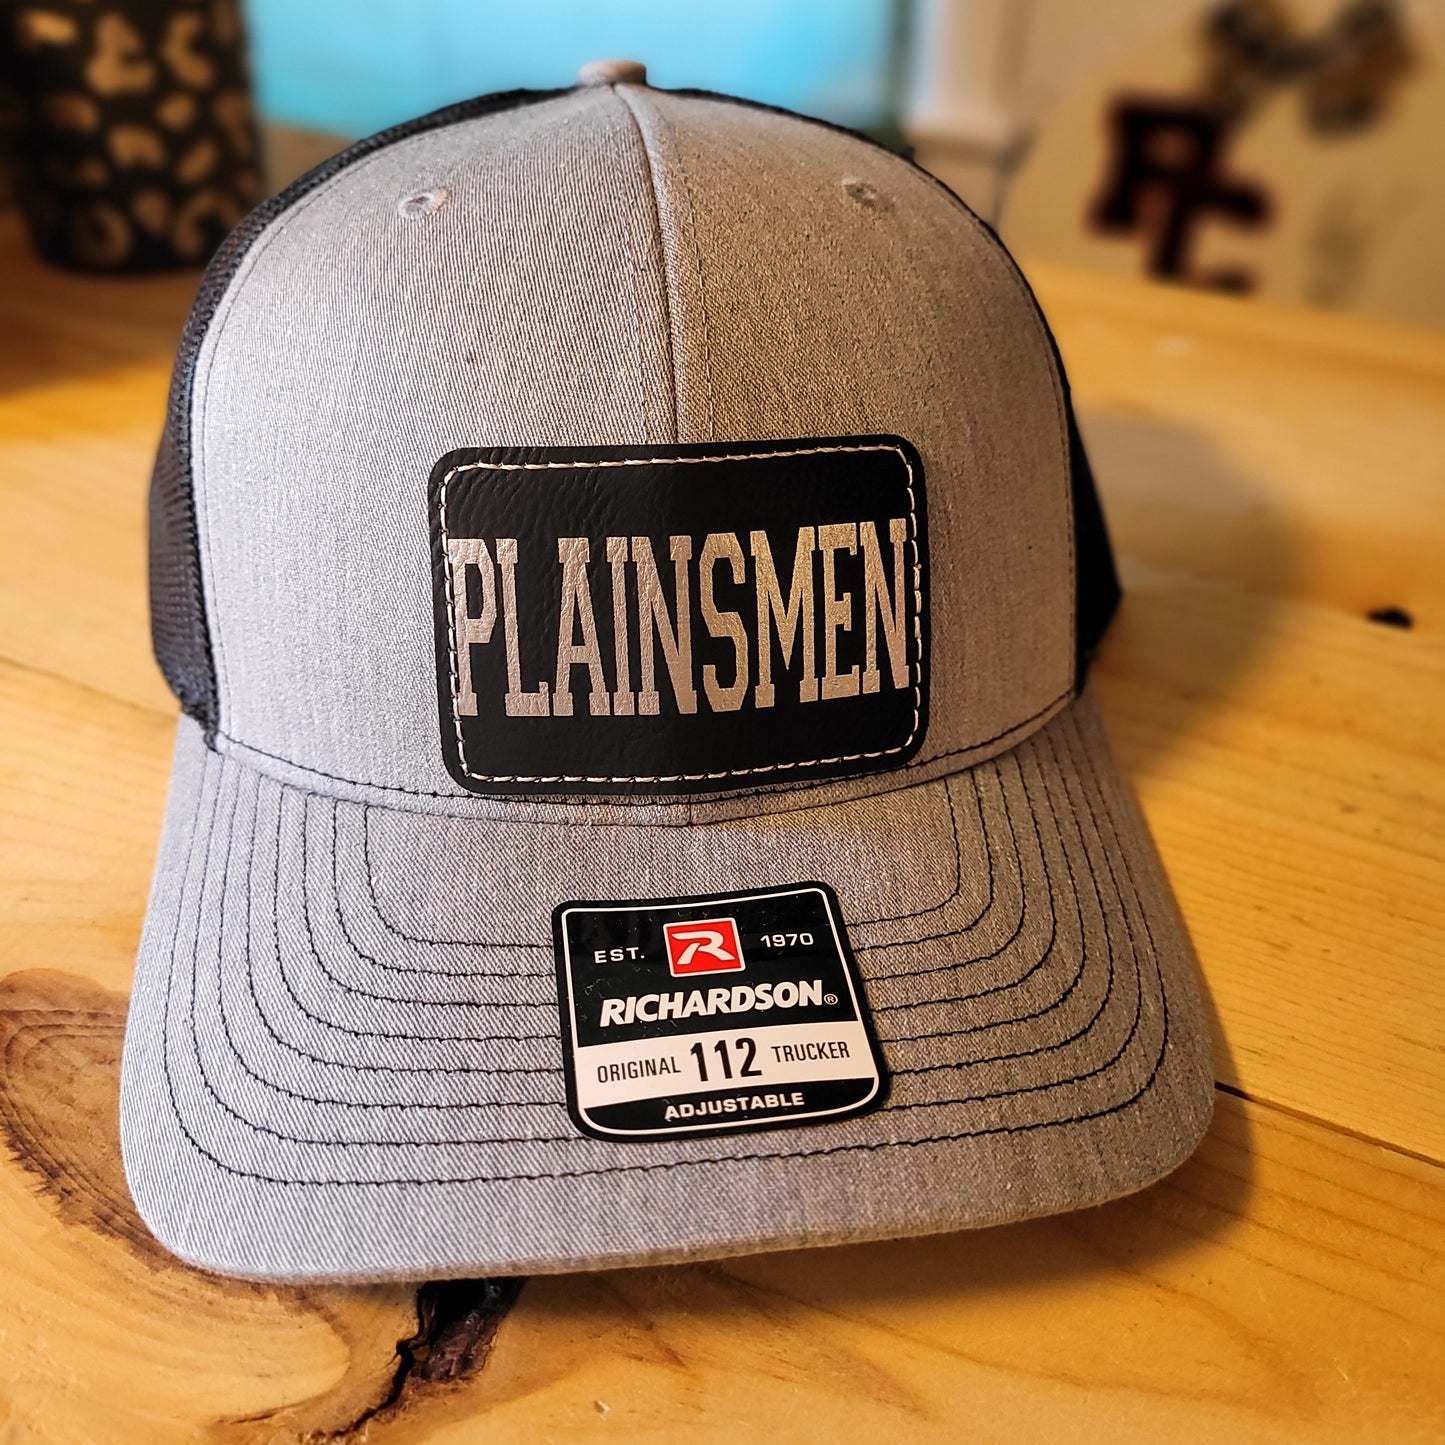 Richardson hat with Plainsmen patch